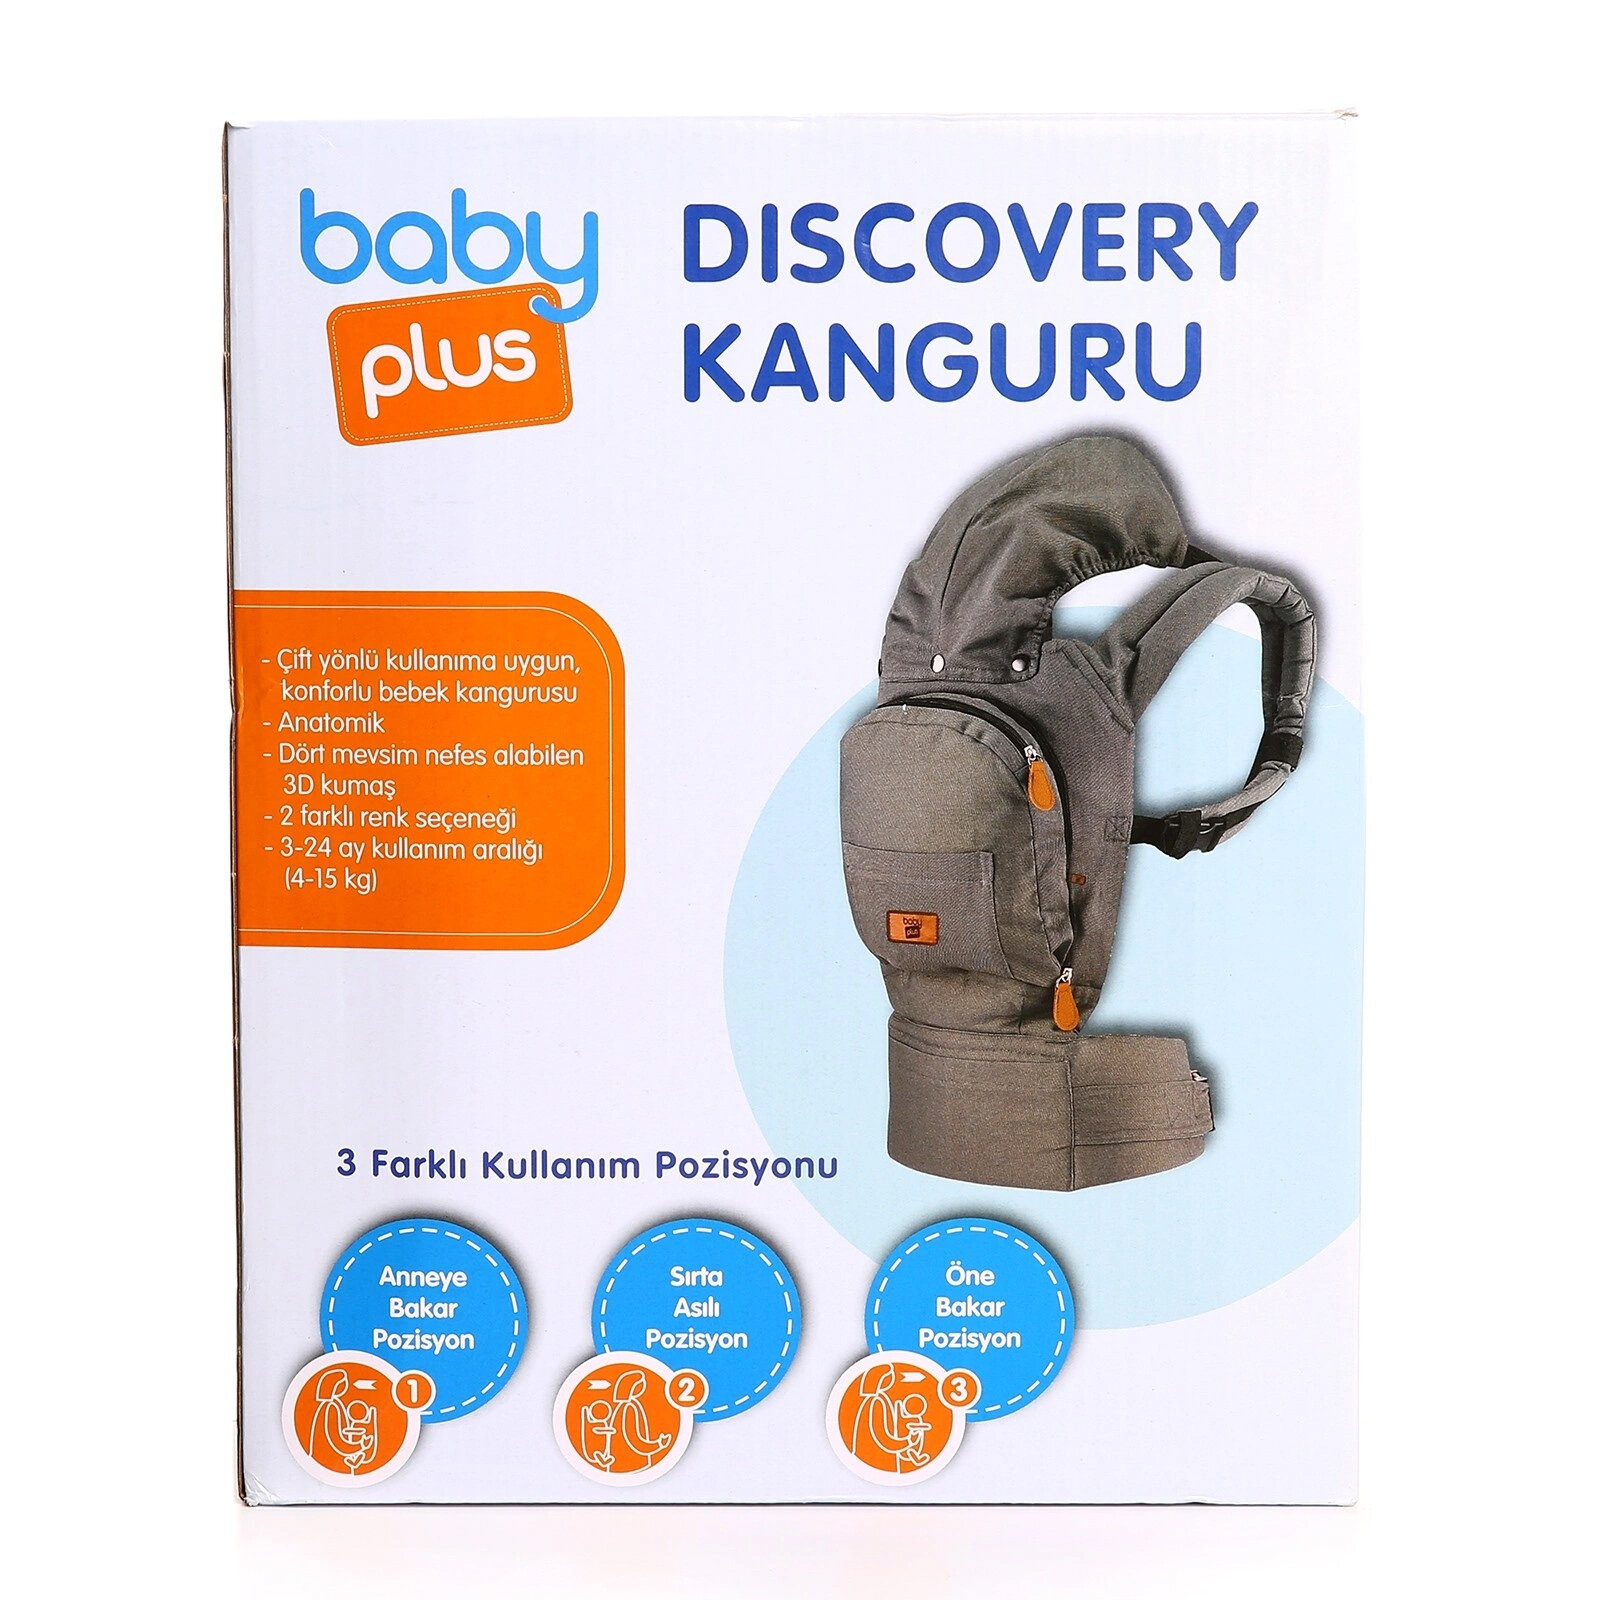 Discovery Kanguru